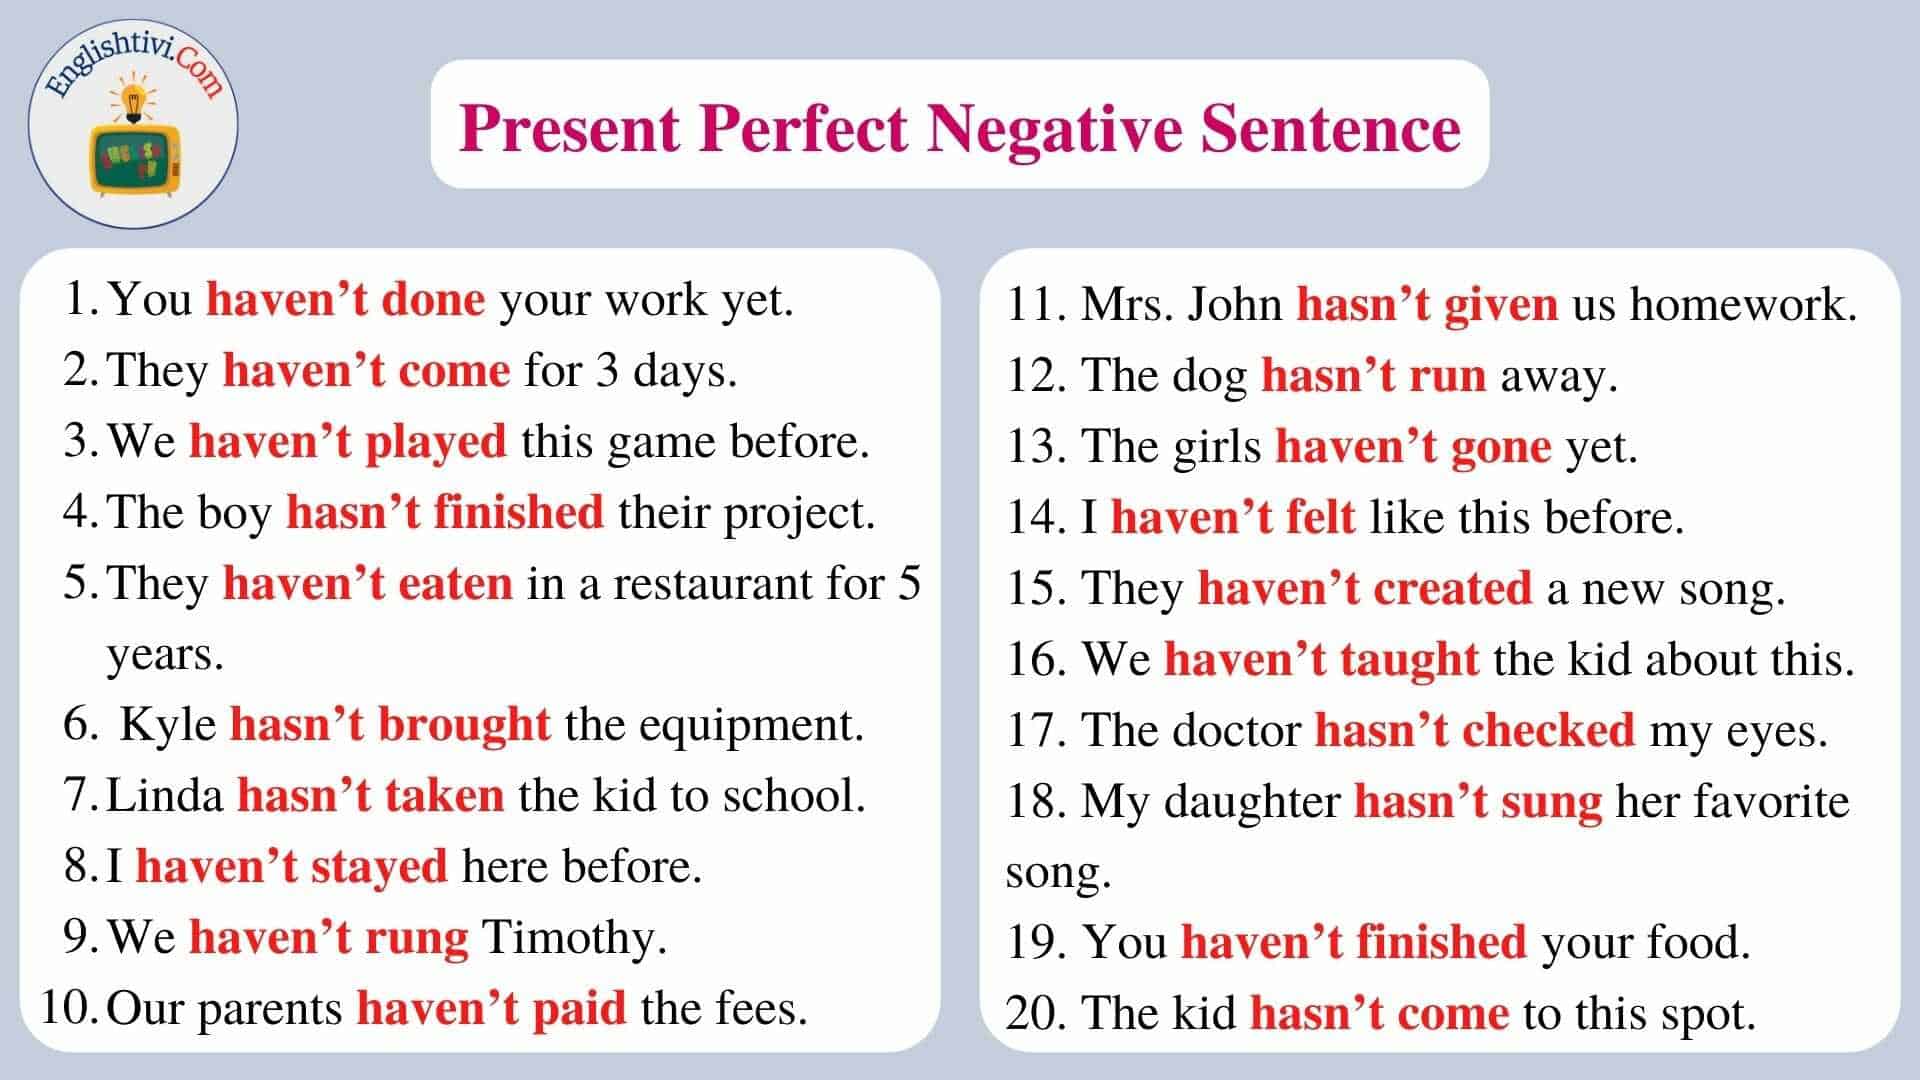 Present_Perfect_Negative_Sentence